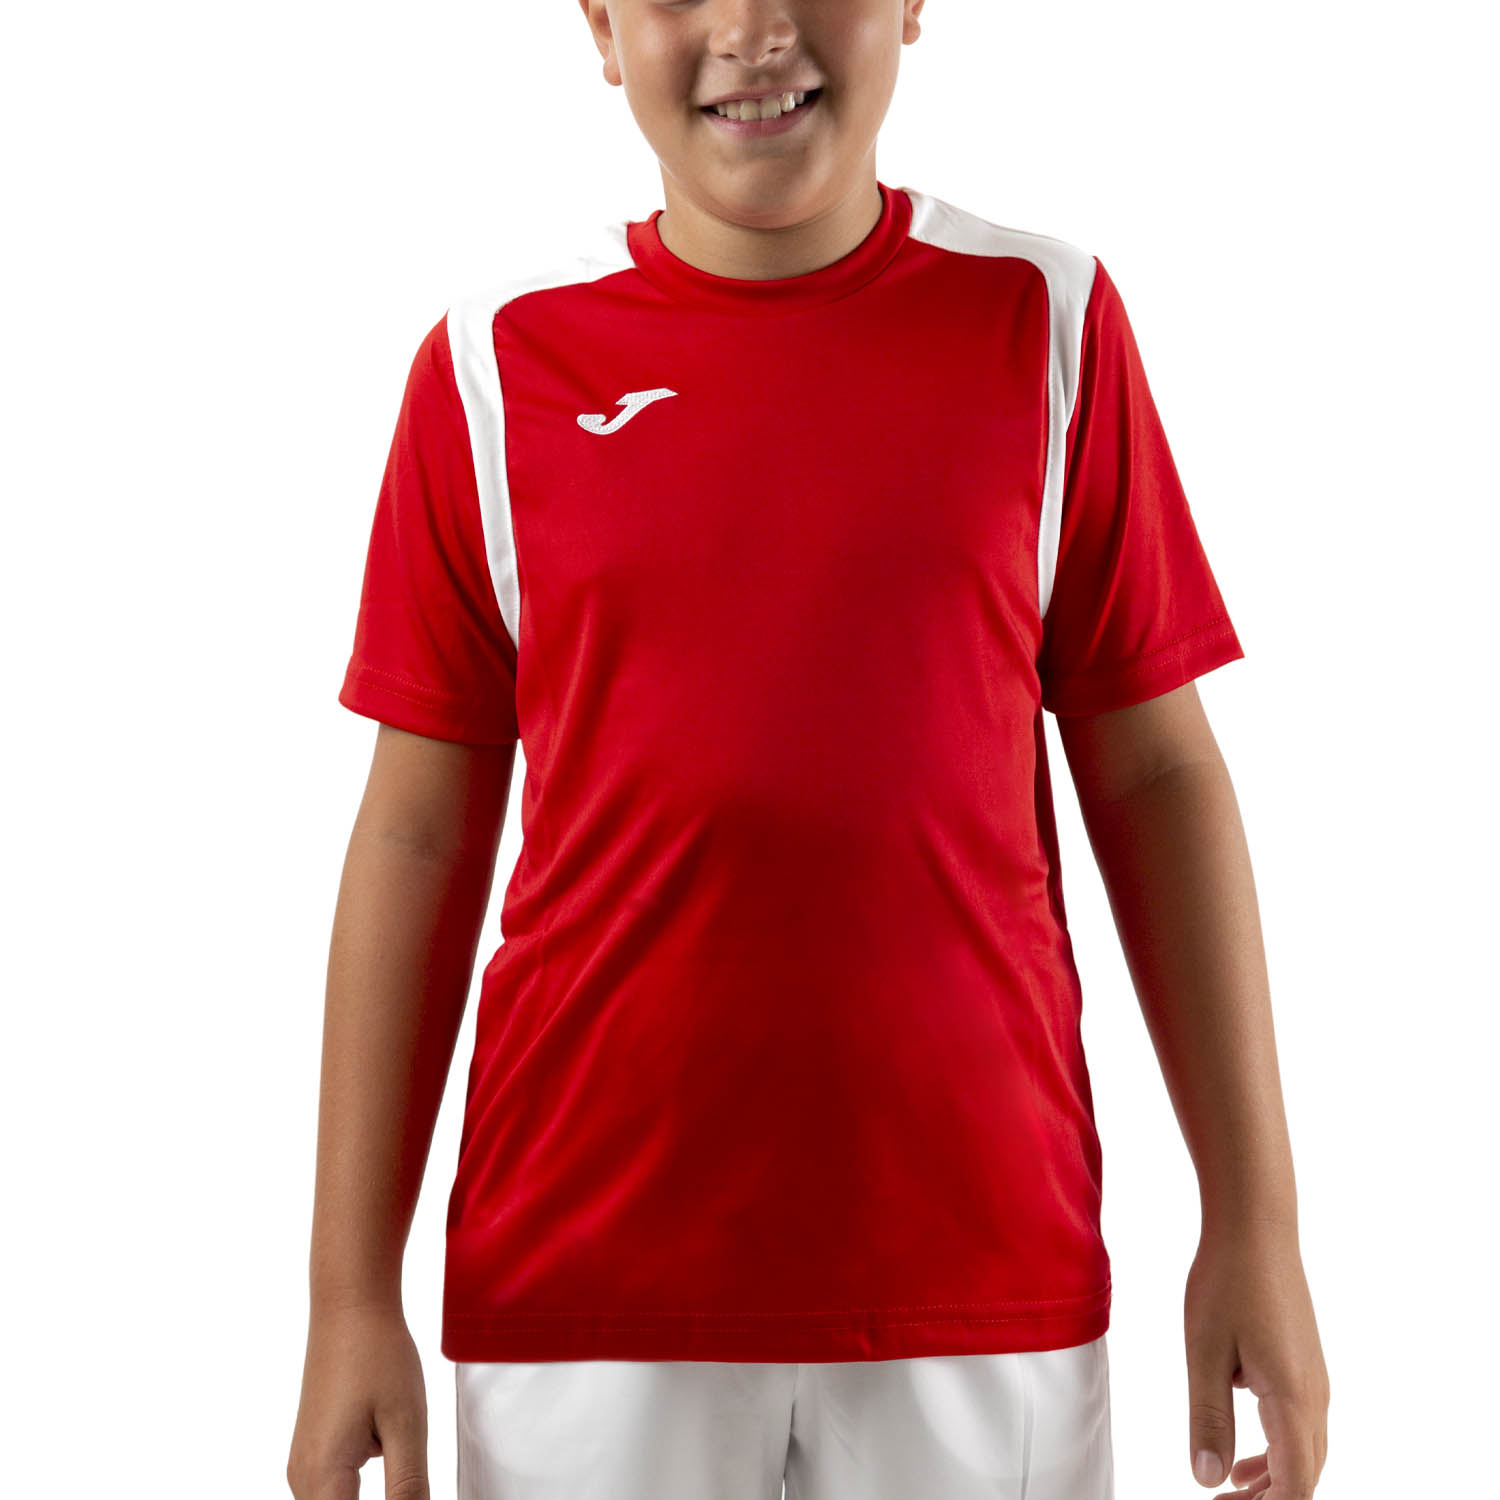 Joma Championship V T-Shirt Boys - Red/White